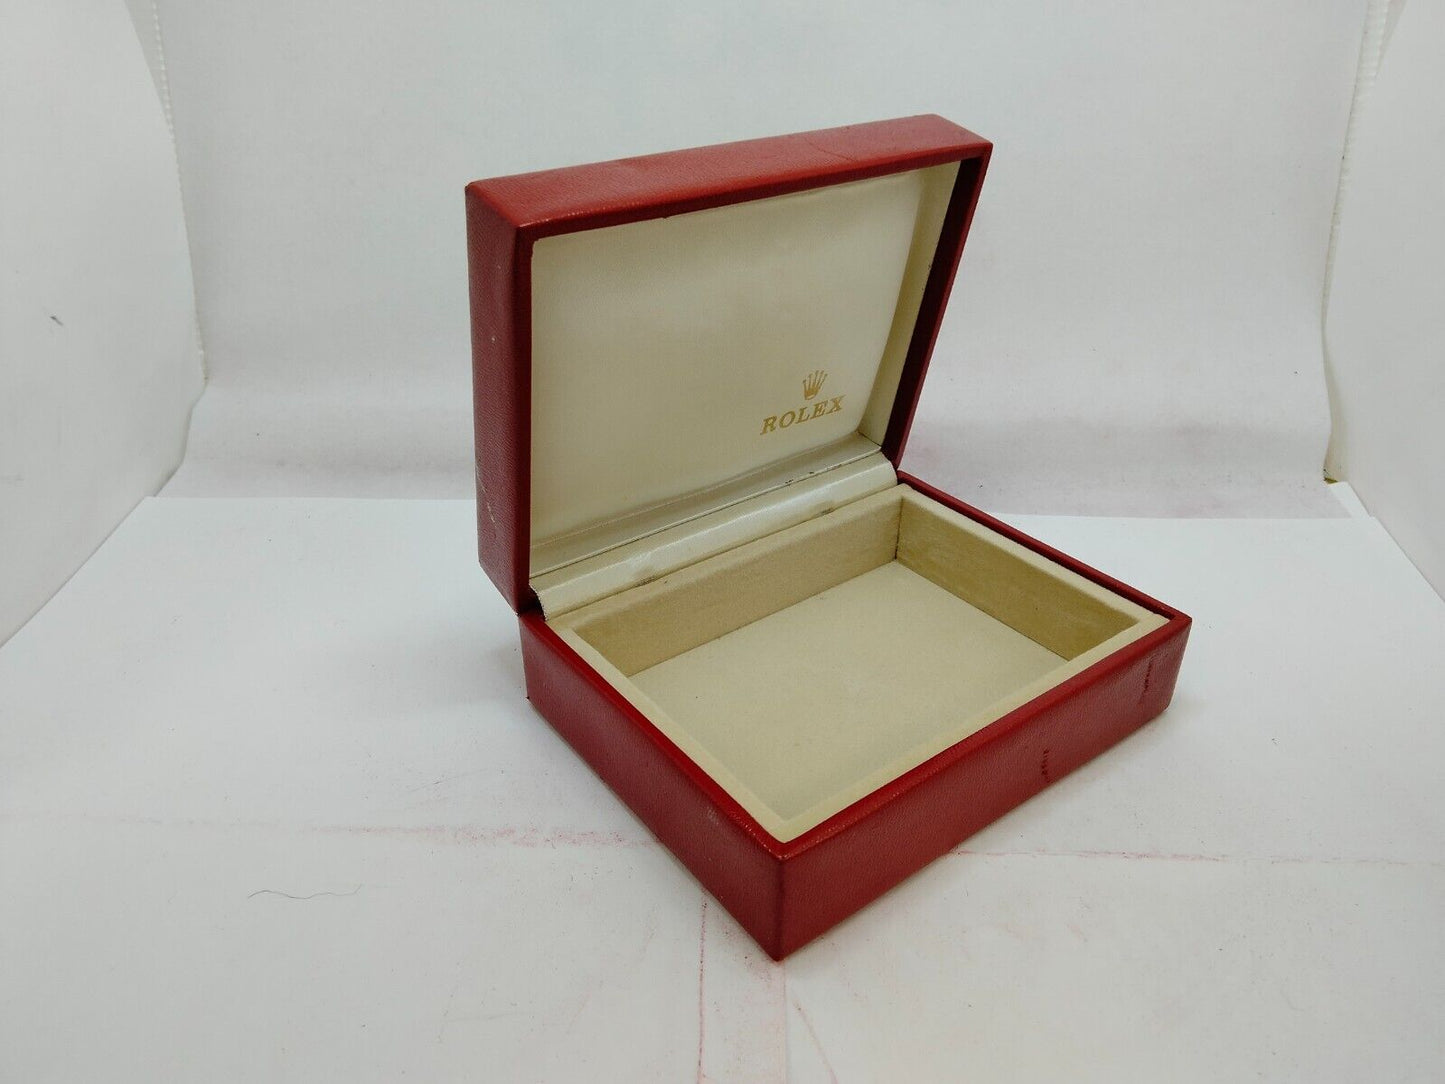 VINTAGE GENUINE ROLEX red watch box case 14.00.02 wood leather 1001001y4S